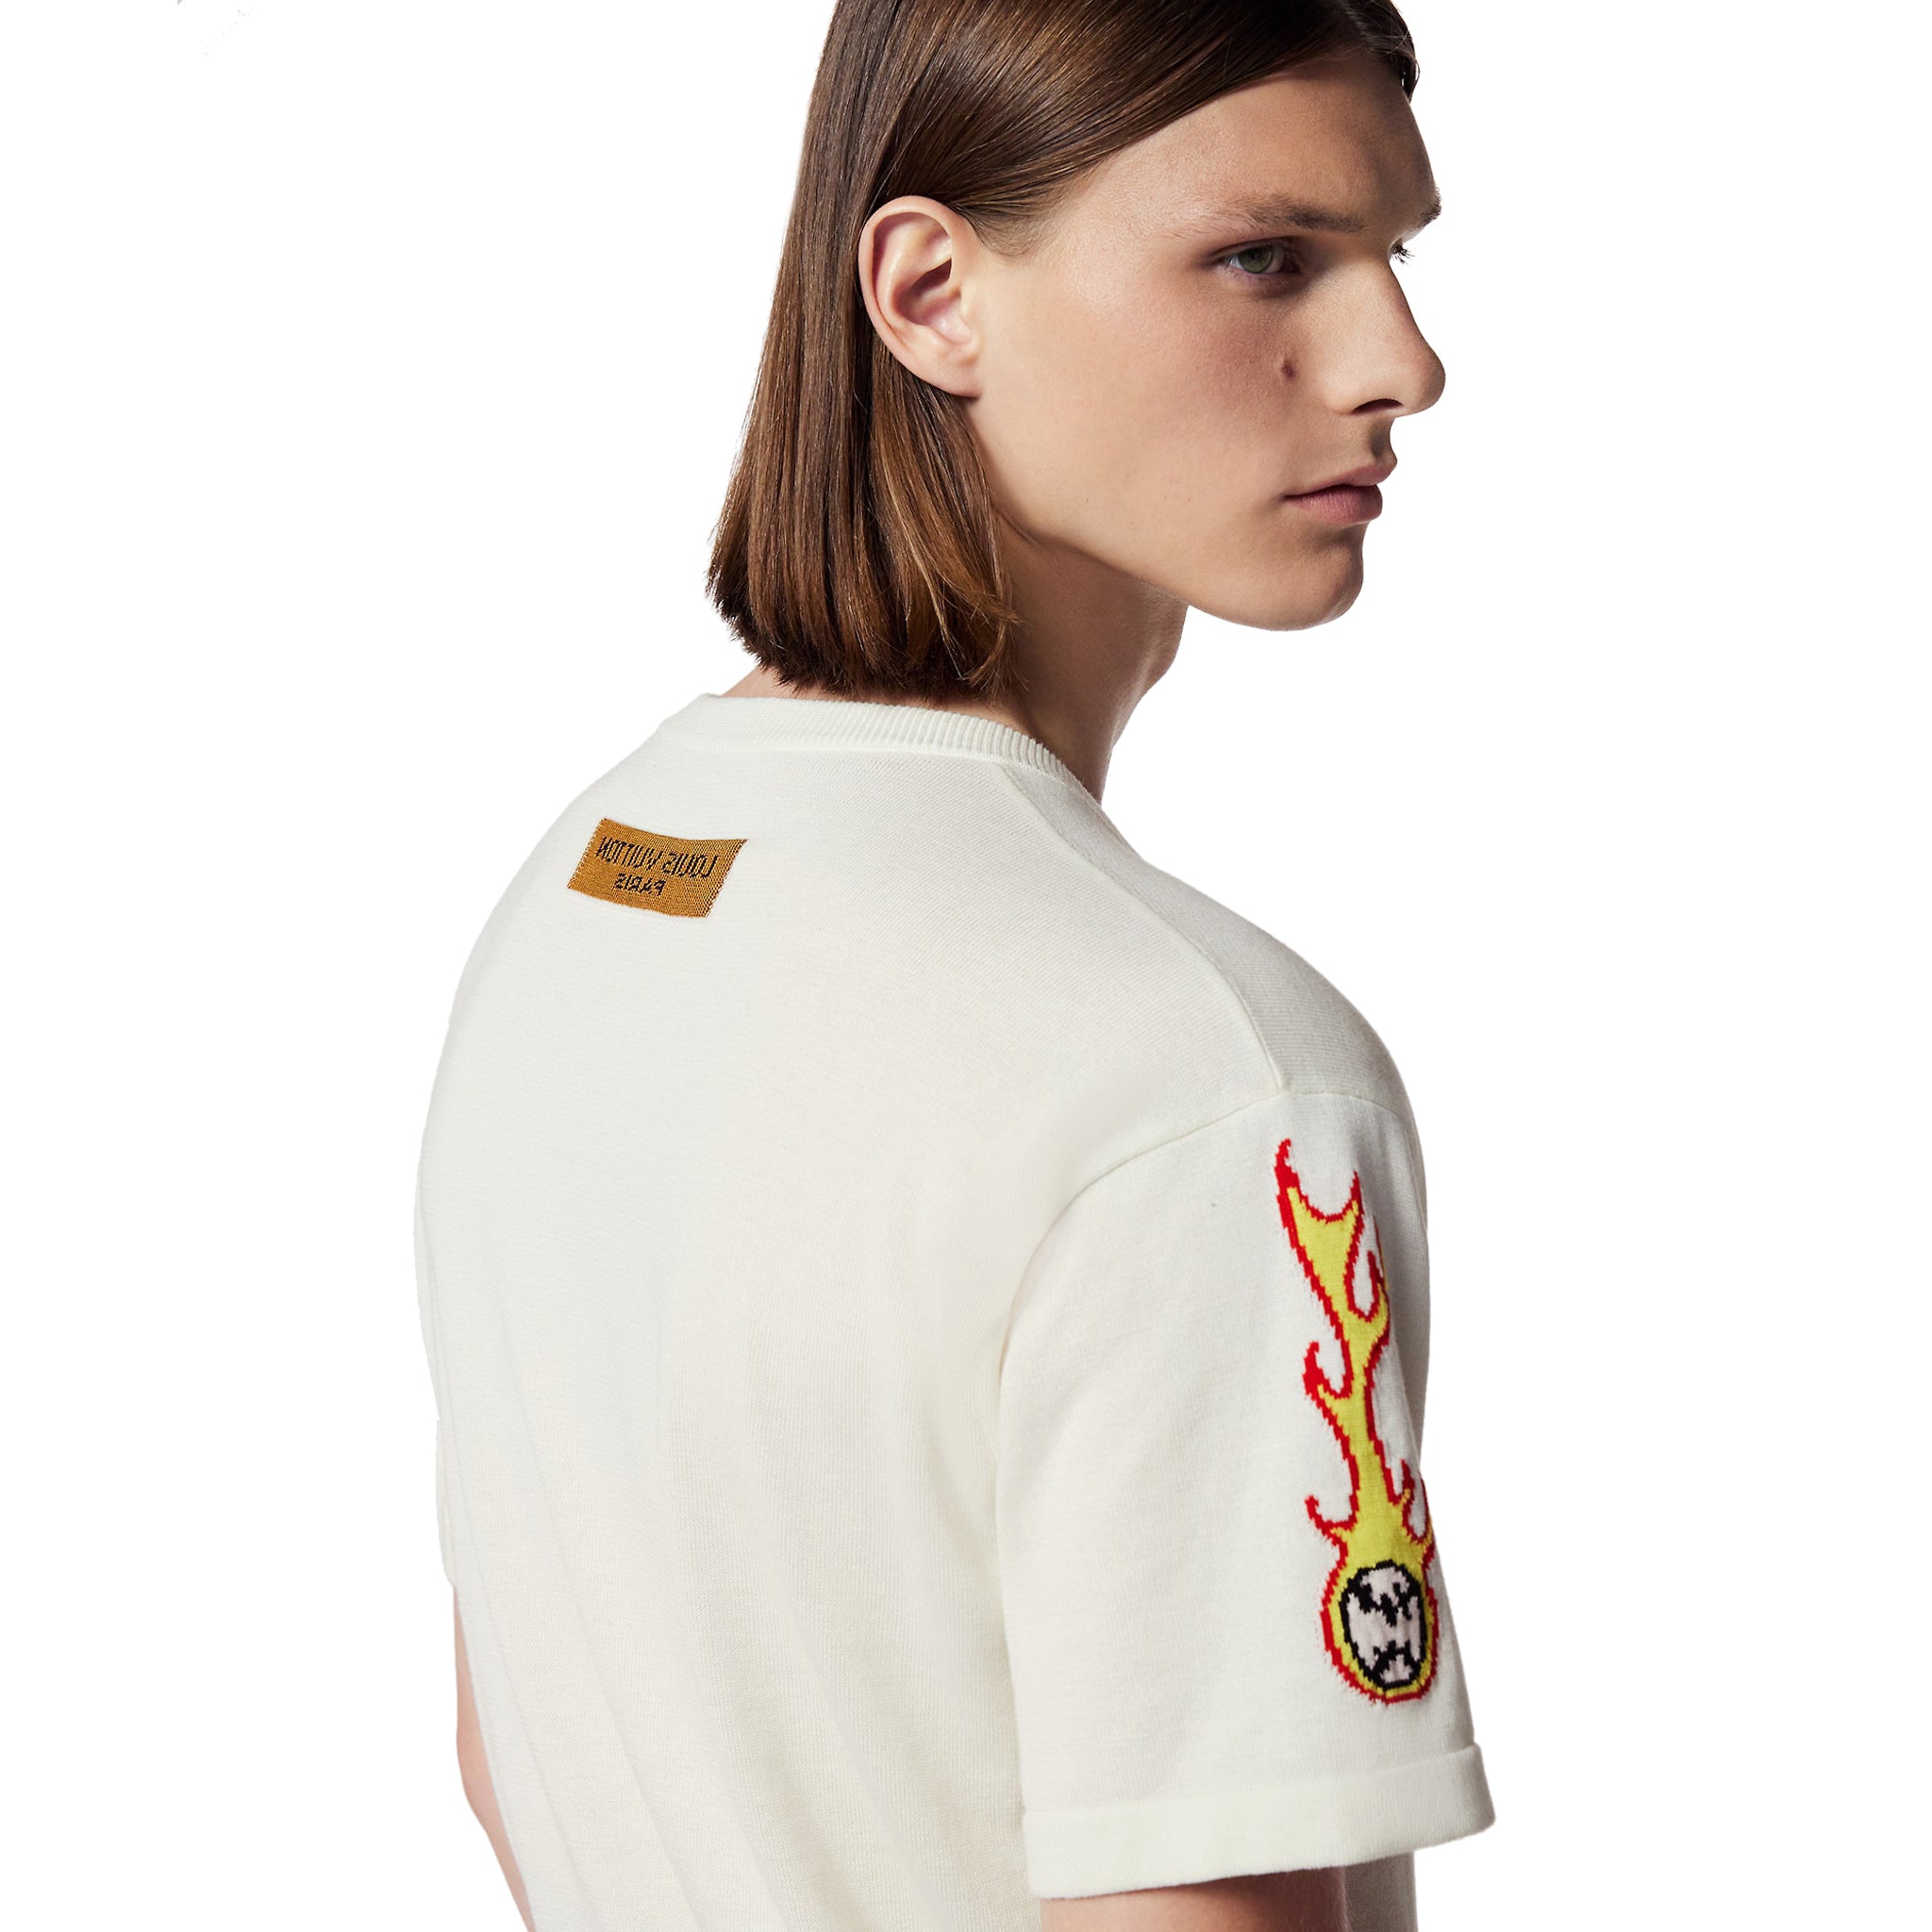 Cheap Black Lv Polo Shirt Mens, Louis Vuitton Polo T Shirts - Rosesy